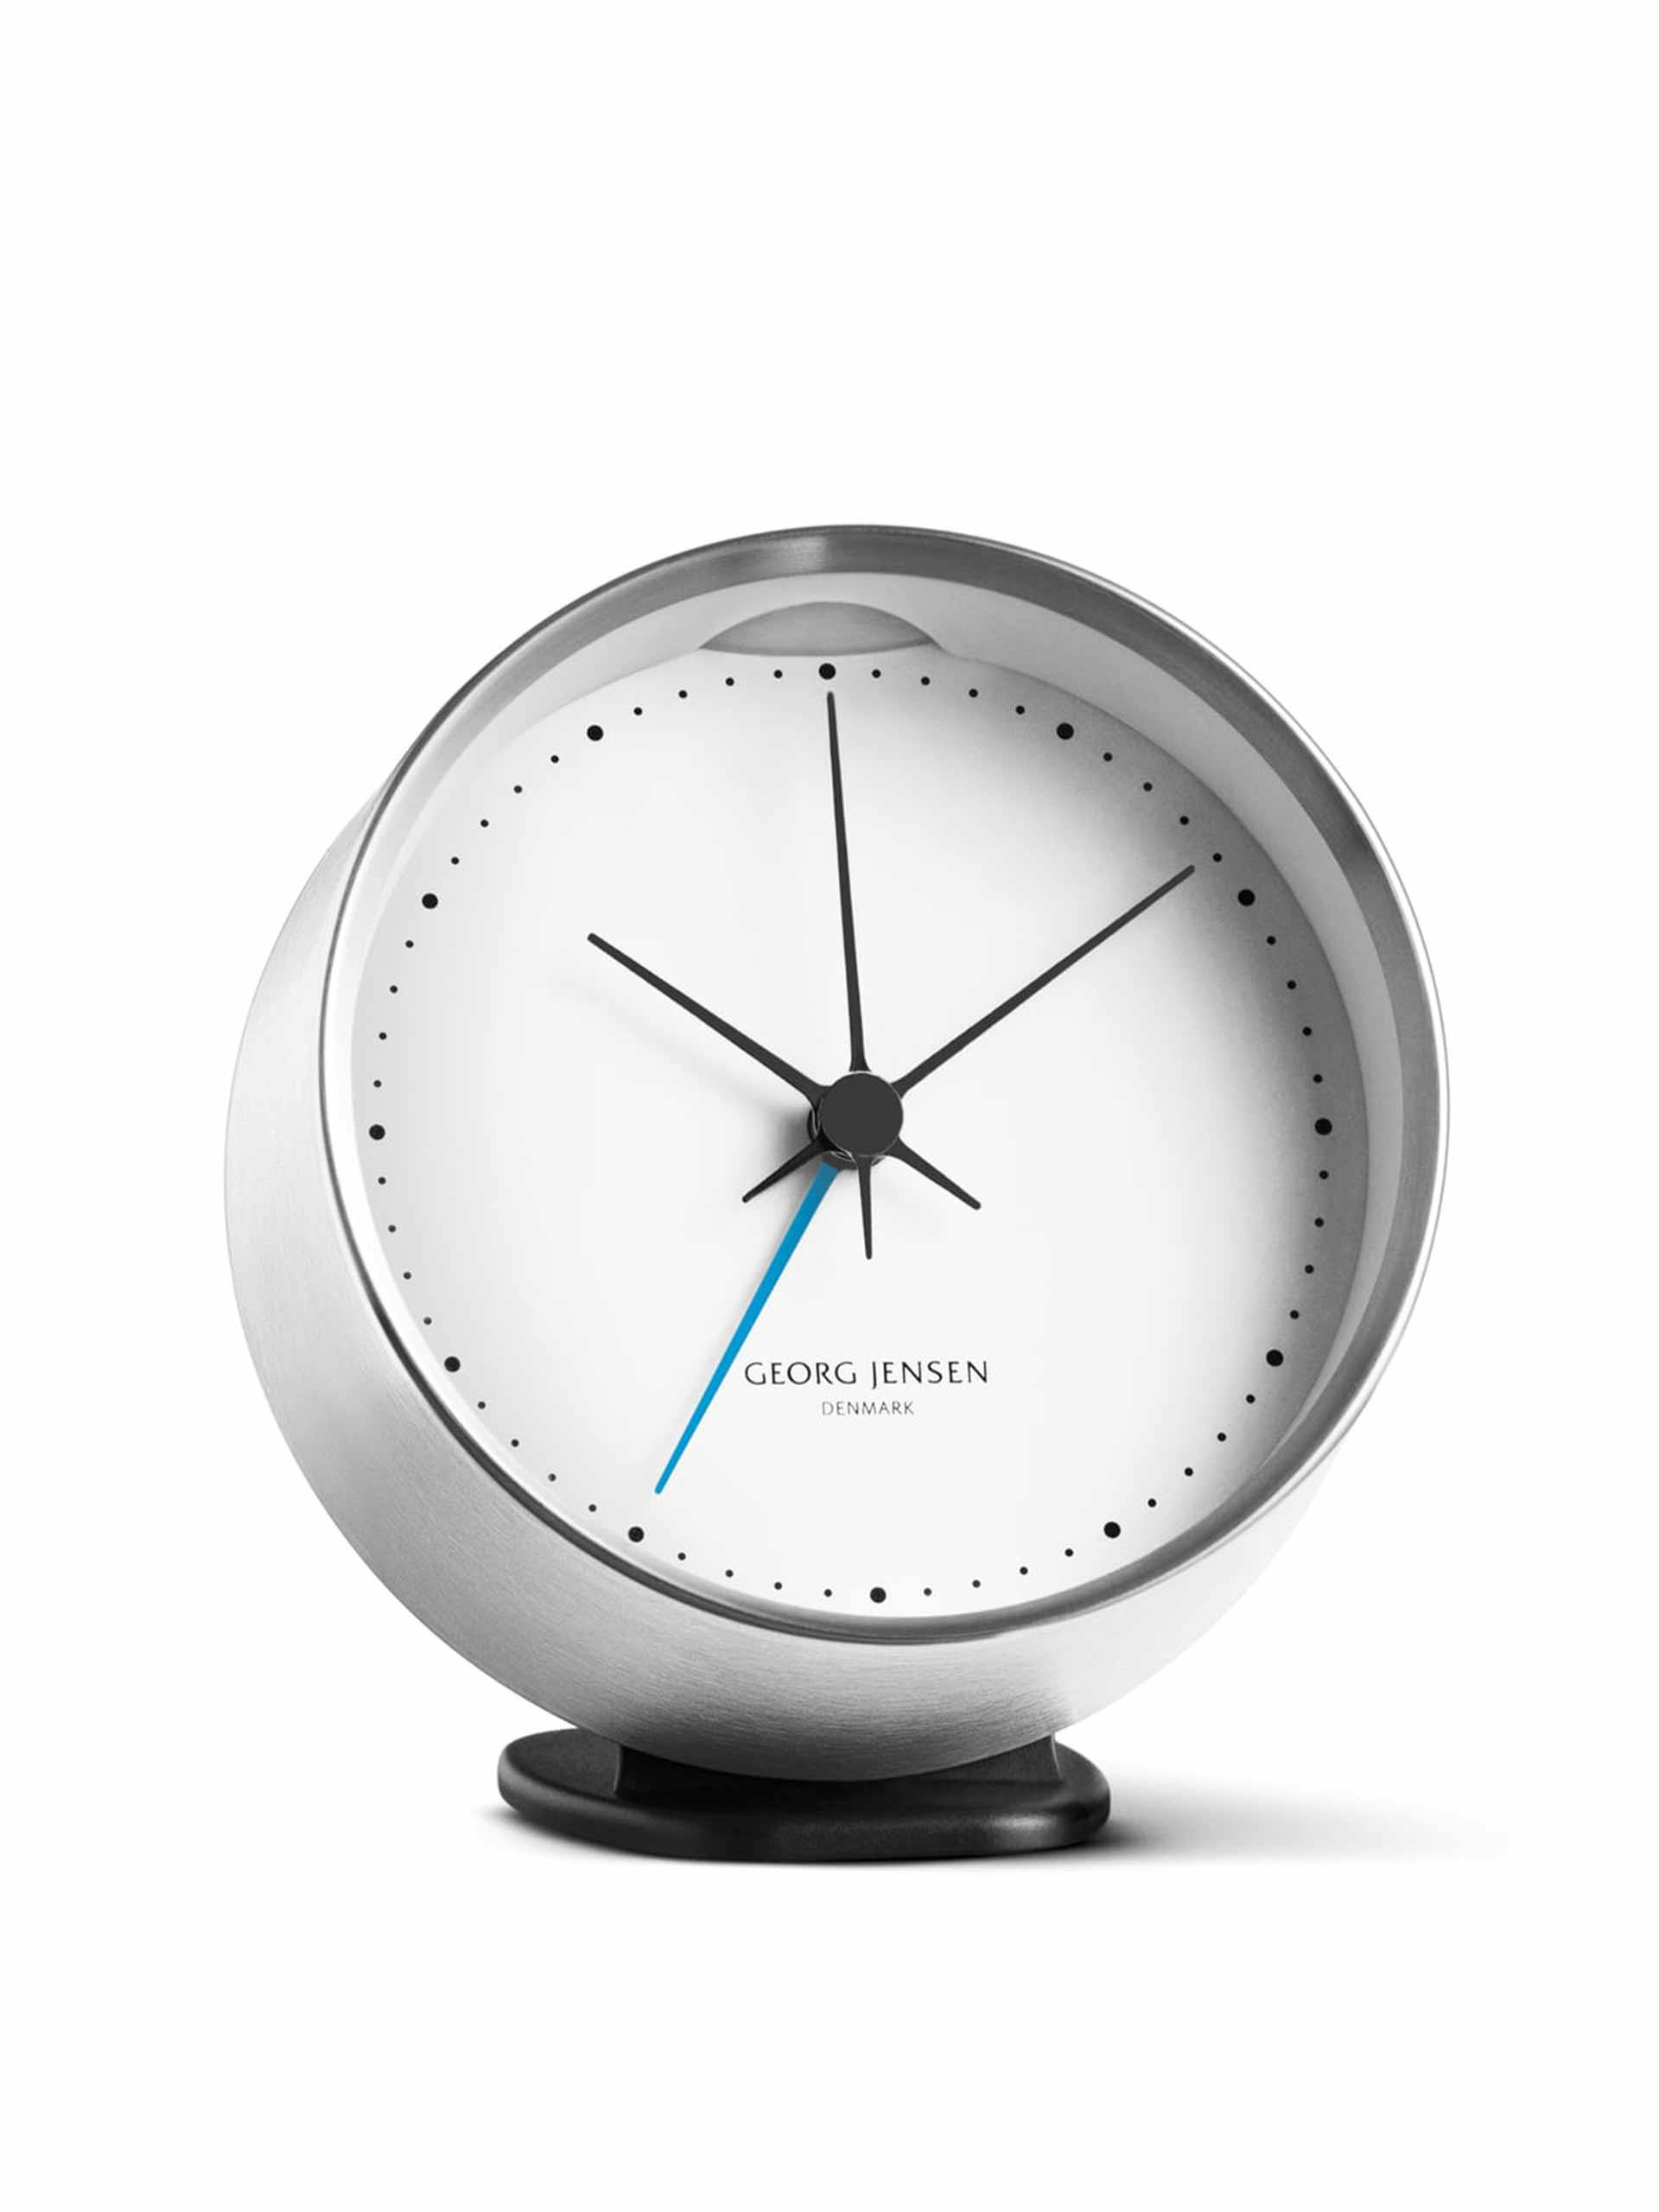 Stainless steel desk alarm clock